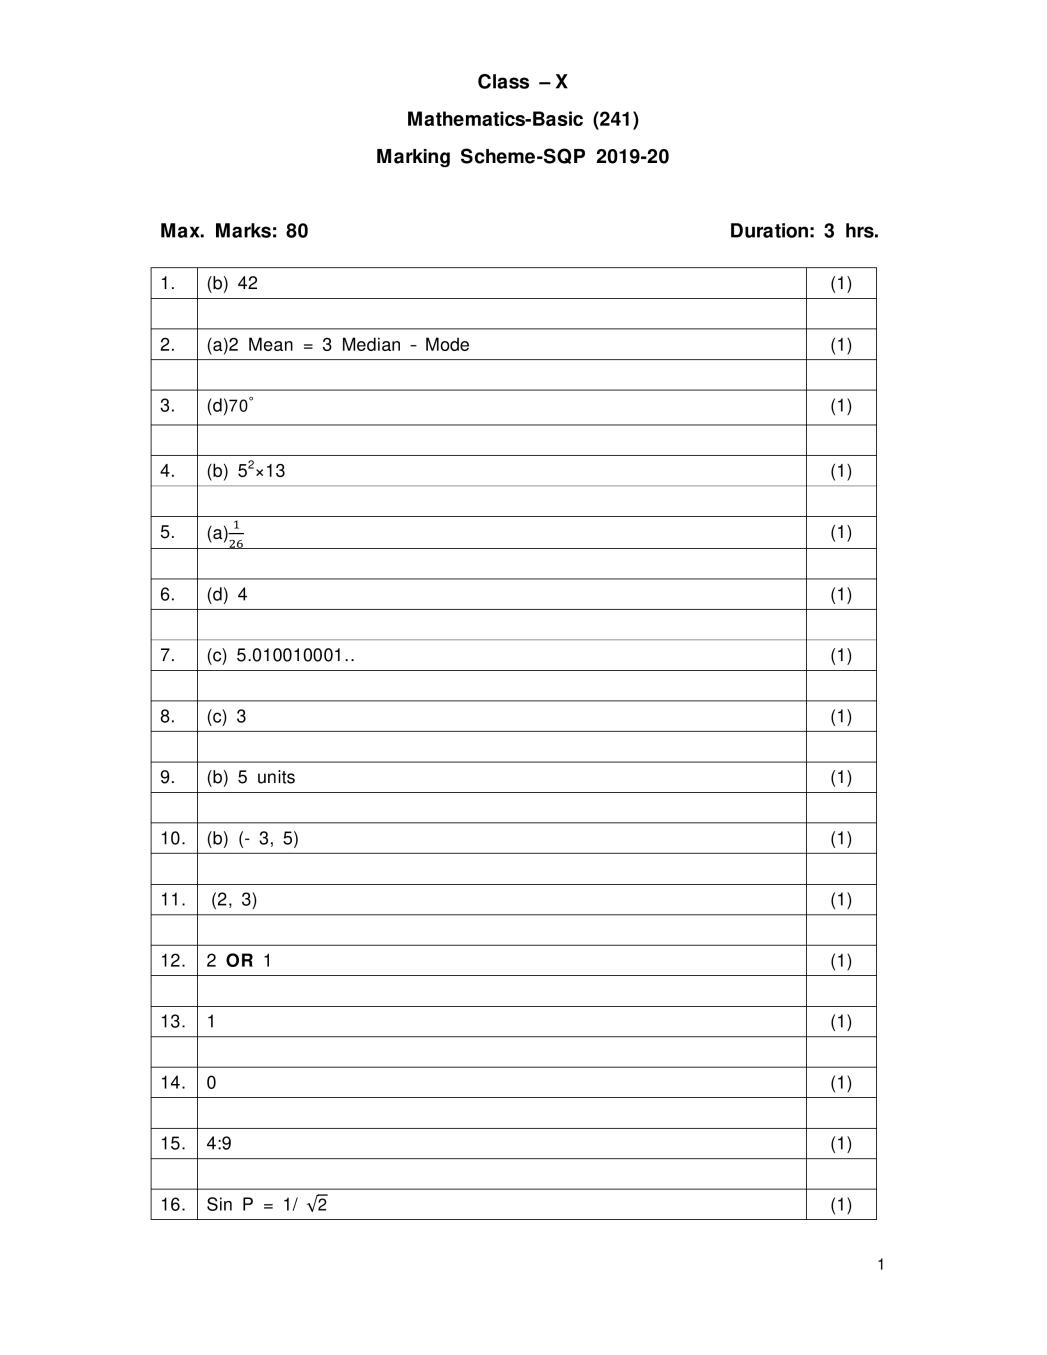 CBSE Class 10 Marking Scheme 2020 for Mathematics Basic - Page 1